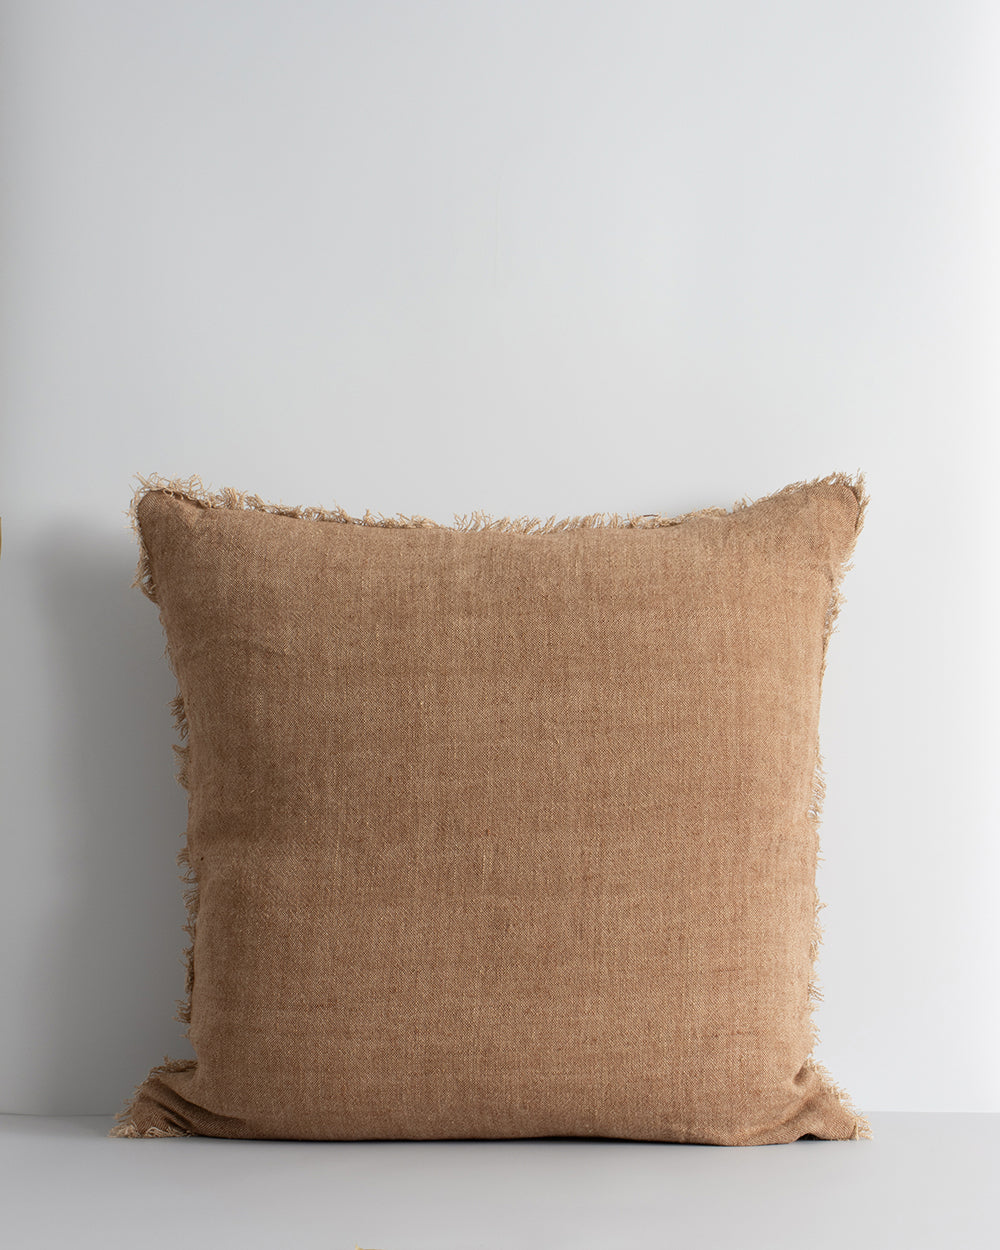 Keaton Linen cushion in cinnamon